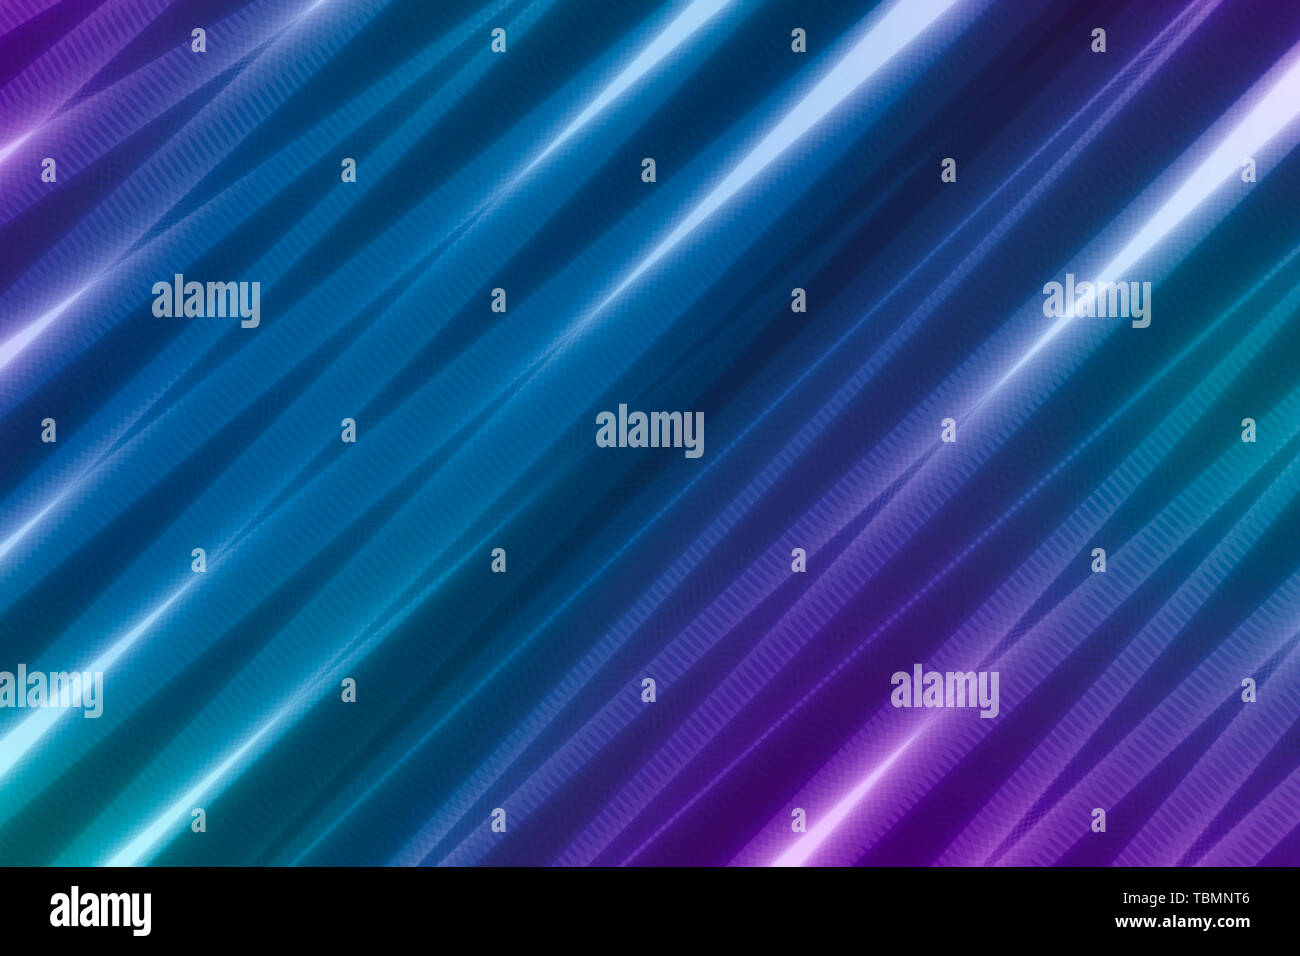 Illustration de bleu et violet abstract background with blurred magic neon light lines. Banque D'Images